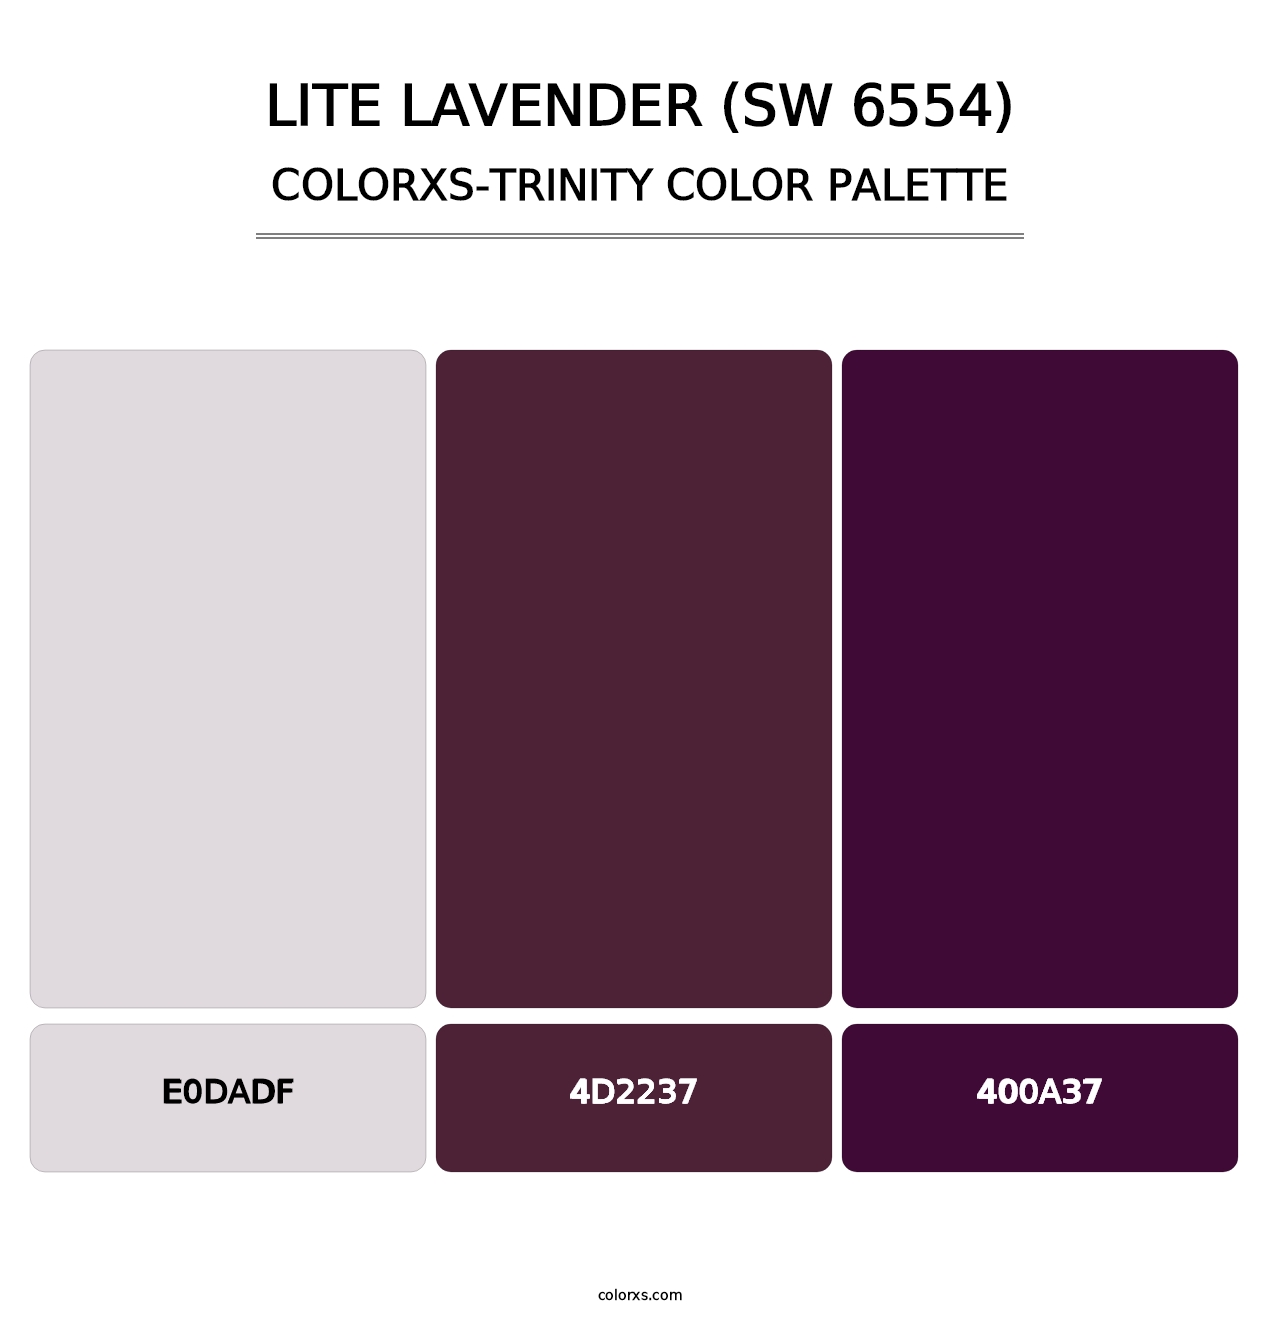 Lite Lavender (SW 6554) - Colorxs Trinity Palette